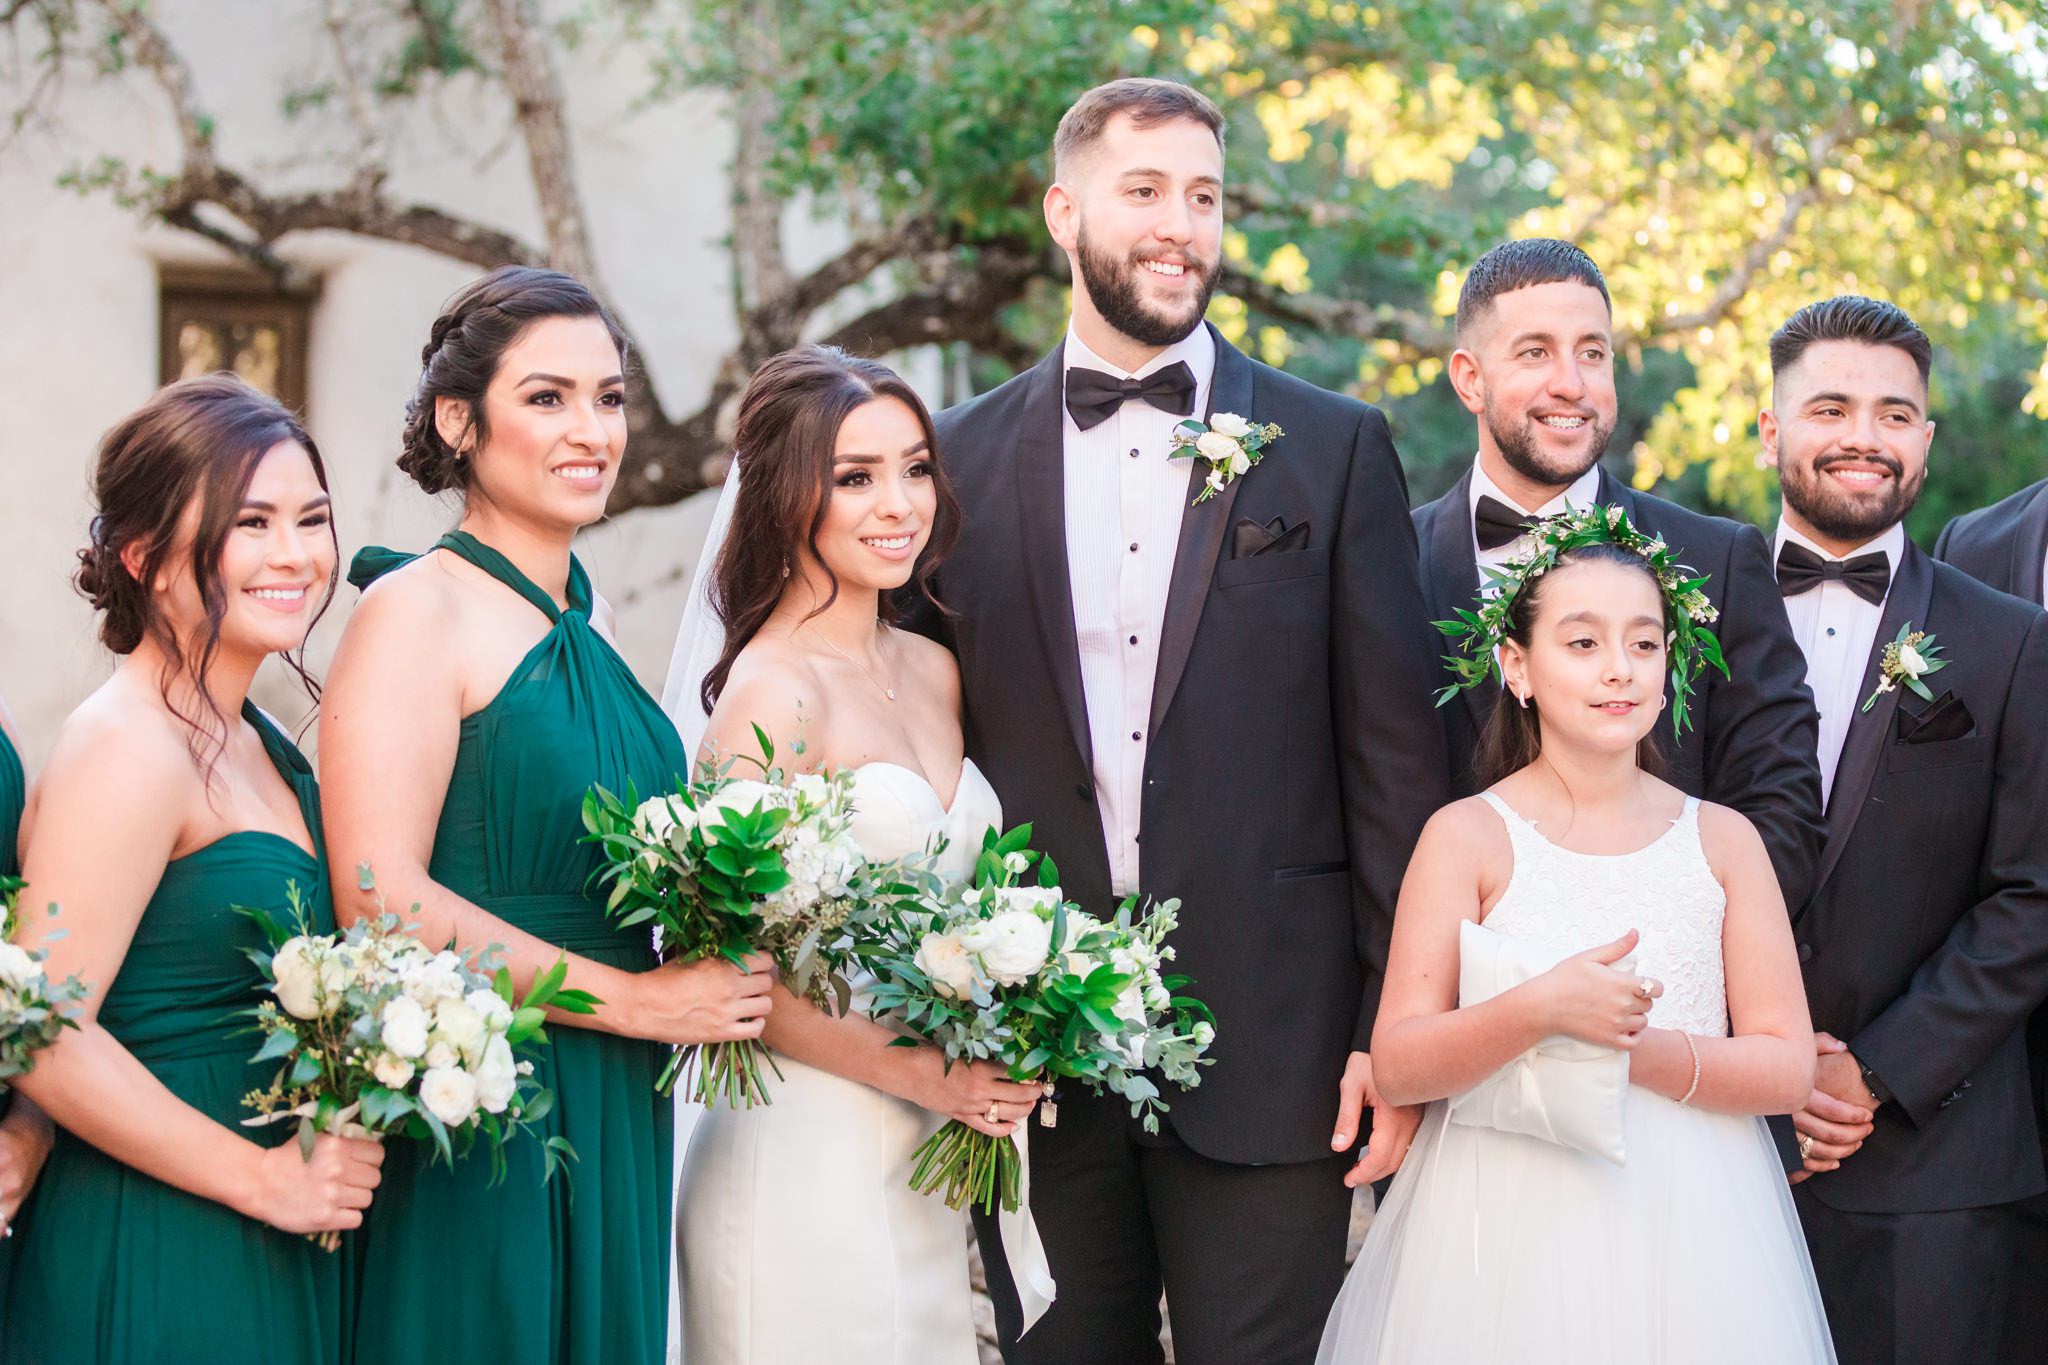 An Emerald, Ivory and Gold Wedding at Lost Mission in Spring Branch, TX by Dawn Elizabeth Studios, San Antonio Wedding Photographer